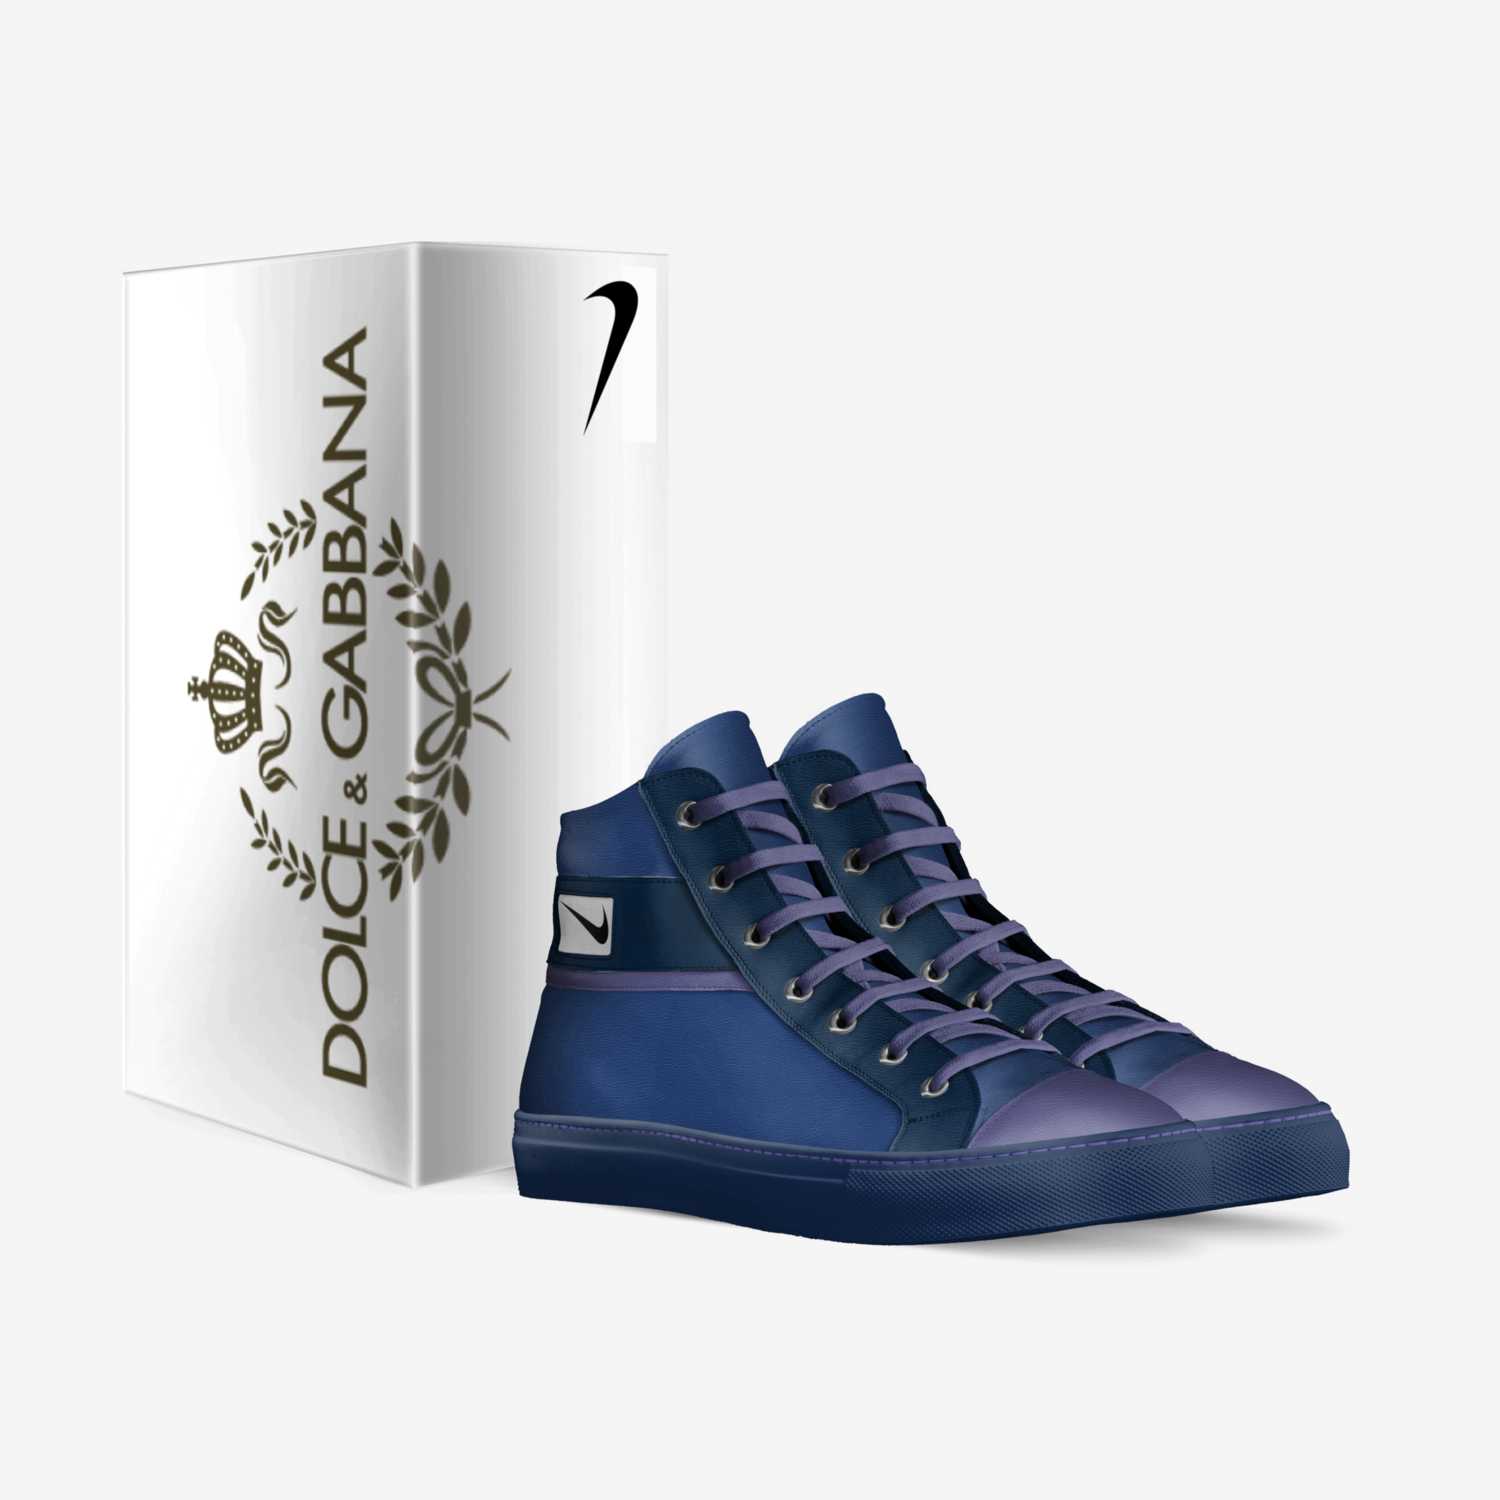 Romano Zero custom made in Italy shoes by Chris Romano | Box view